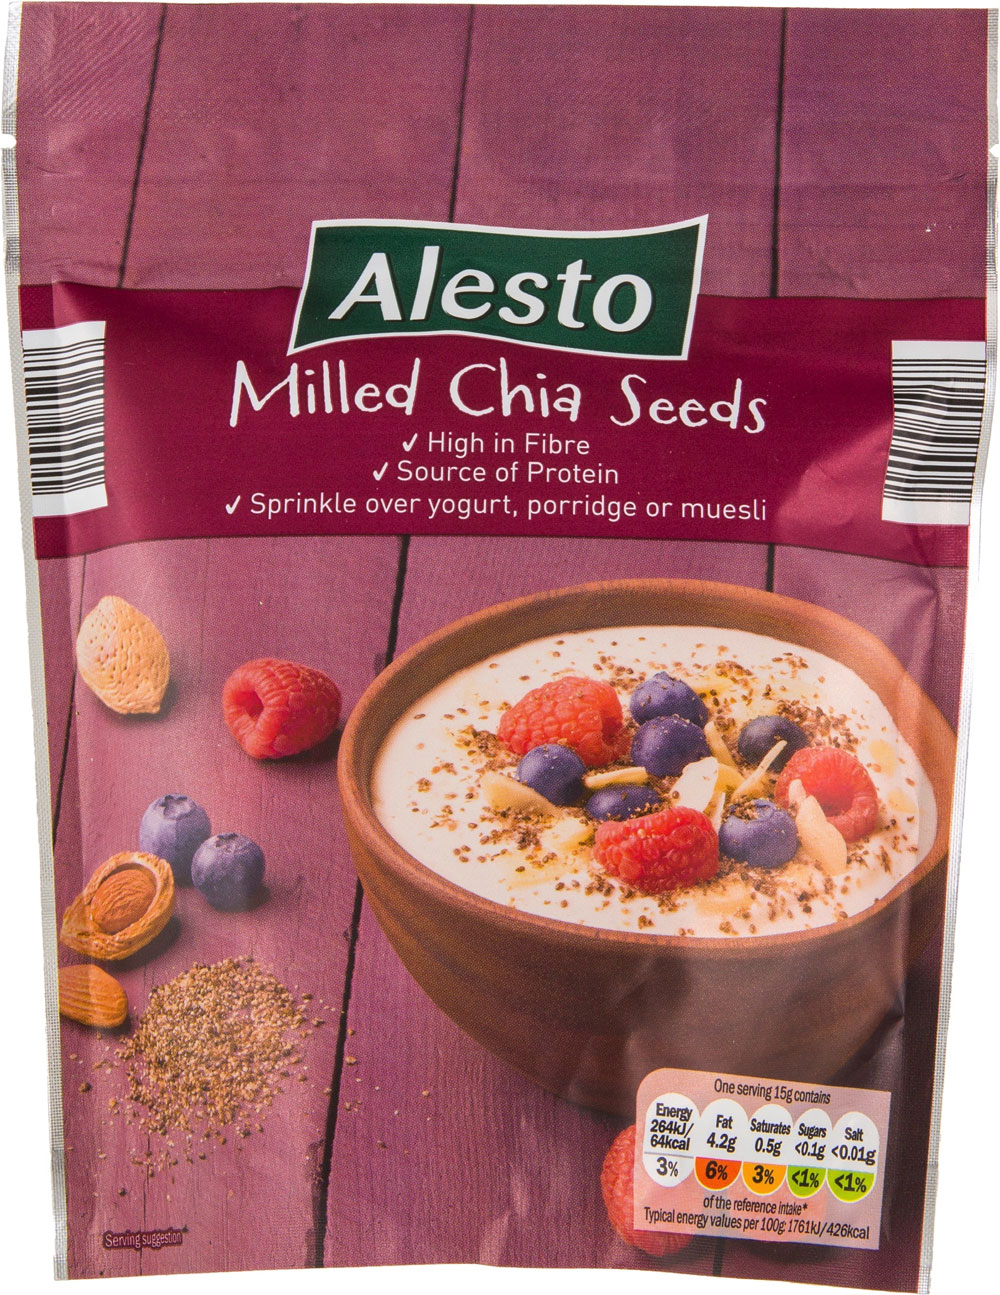 Alesto Milled Chia Seeds